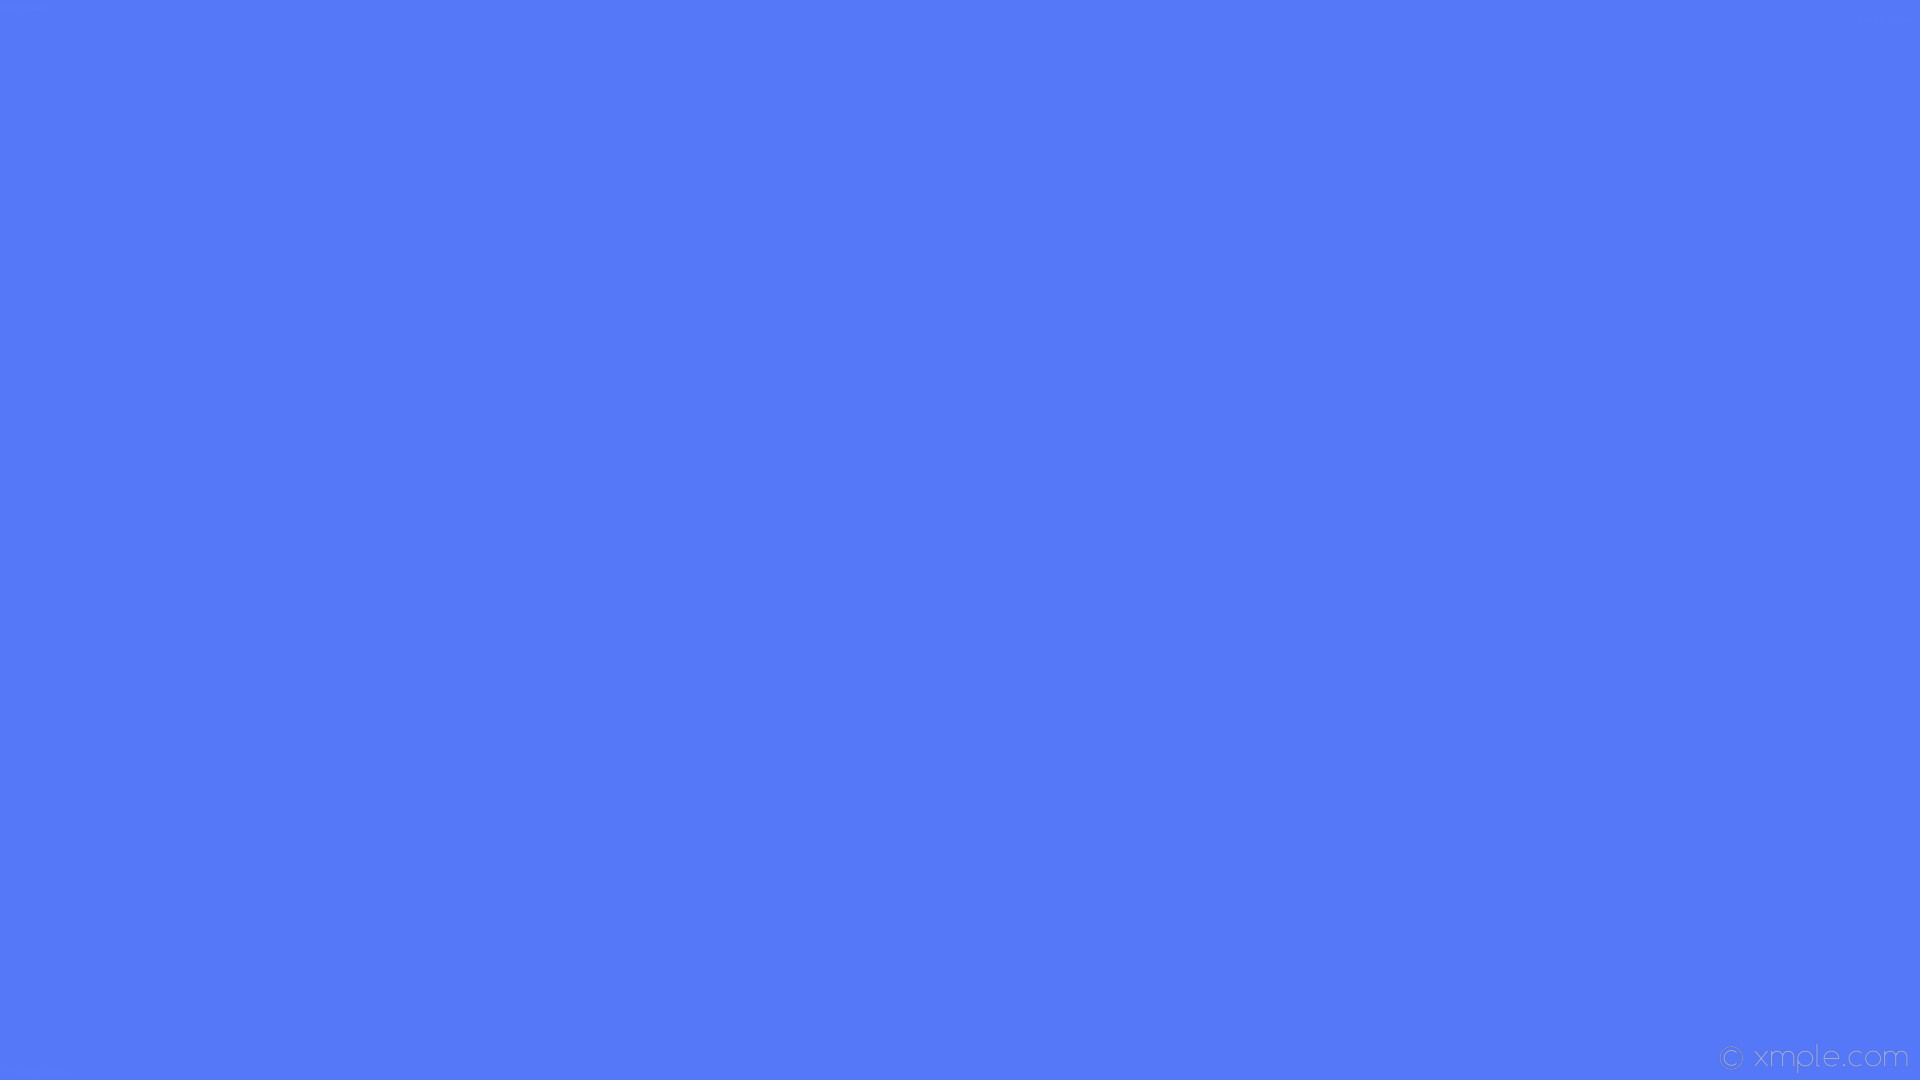 Wallpaper One Colour Plain Blue Single Solid Color - Full Hd Color Blue -  1200x675 Wallpaper 